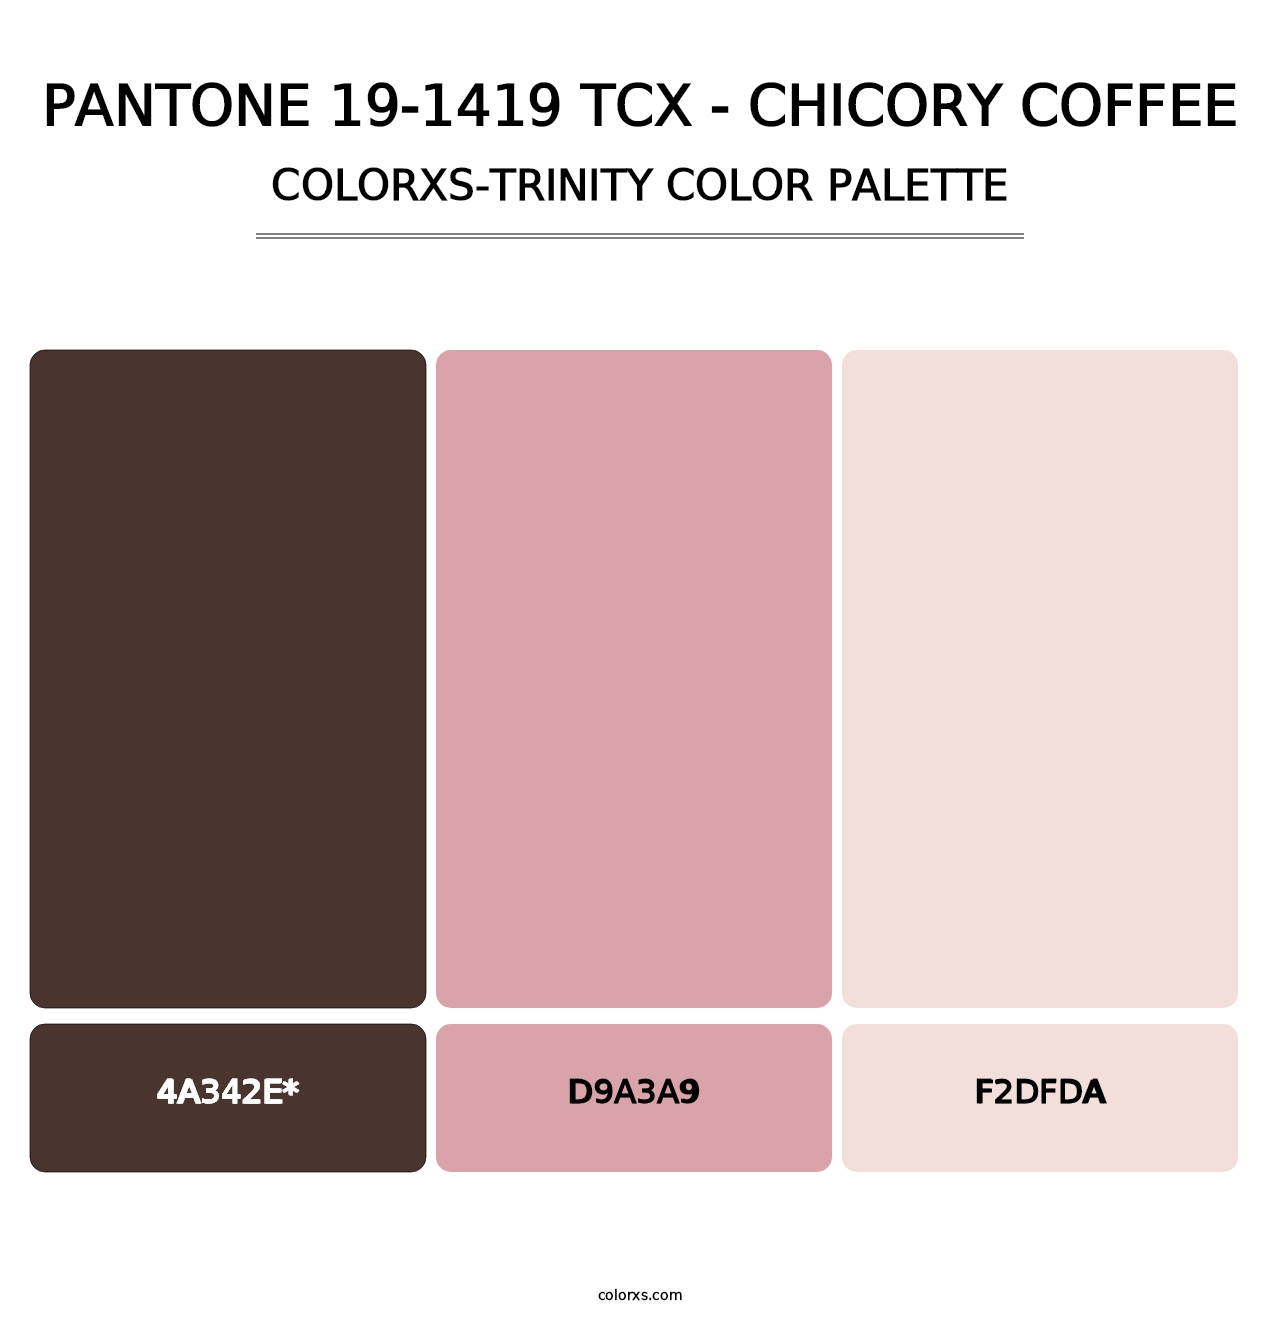 PANTONE 19-1419 TCX - Chicory Coffee - Colorxs Trinity Palette